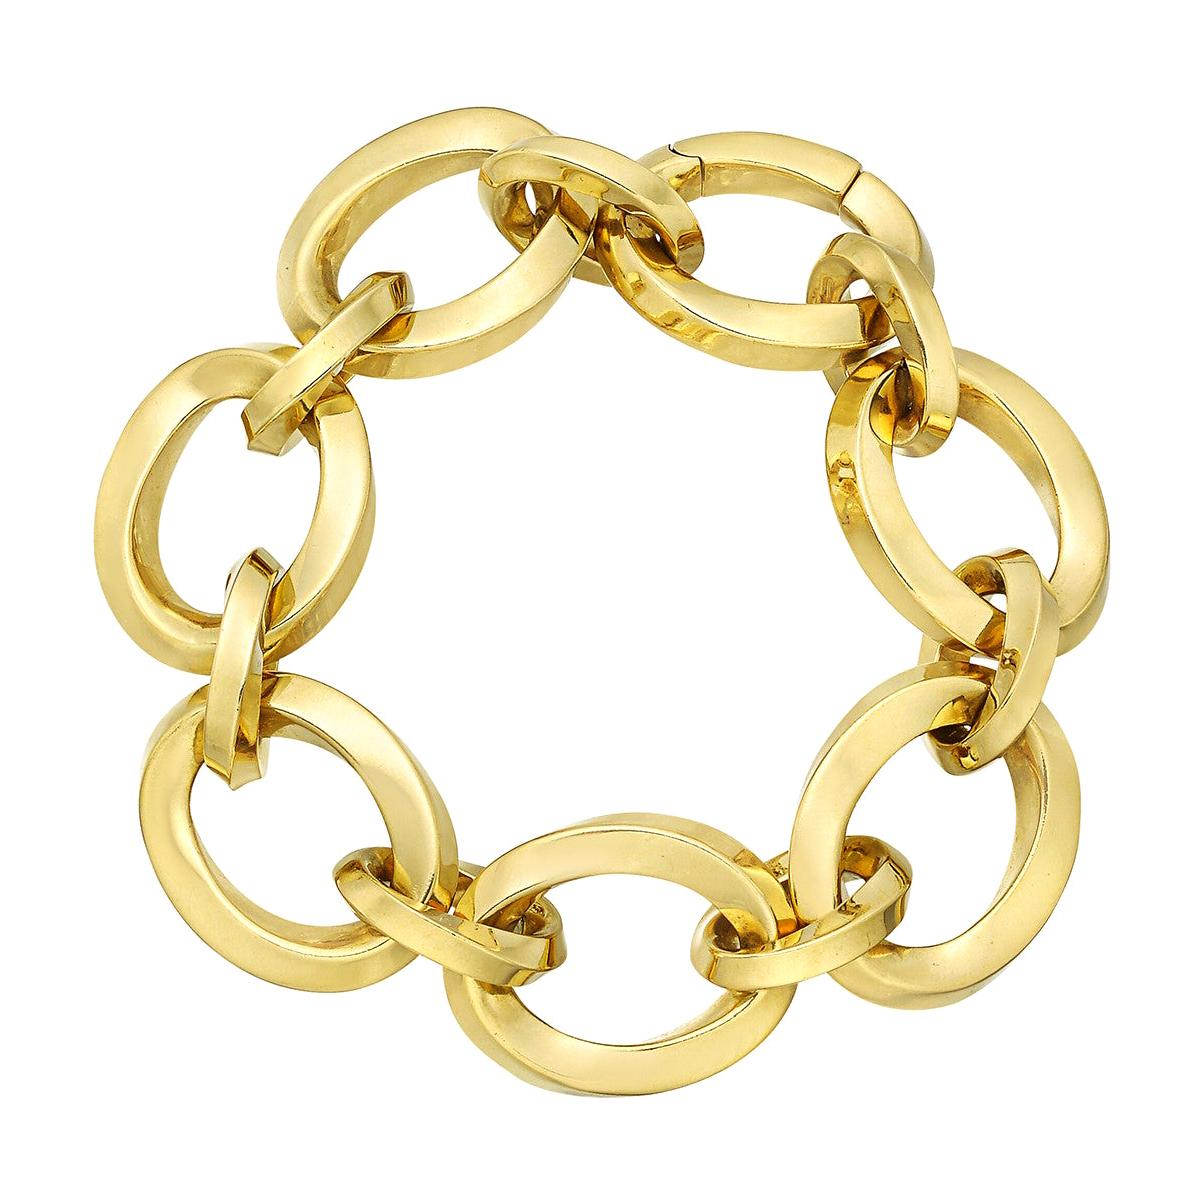 Tiffany & Co. 18 Karat Yellow Gold Twisted Oval Link Bracelet